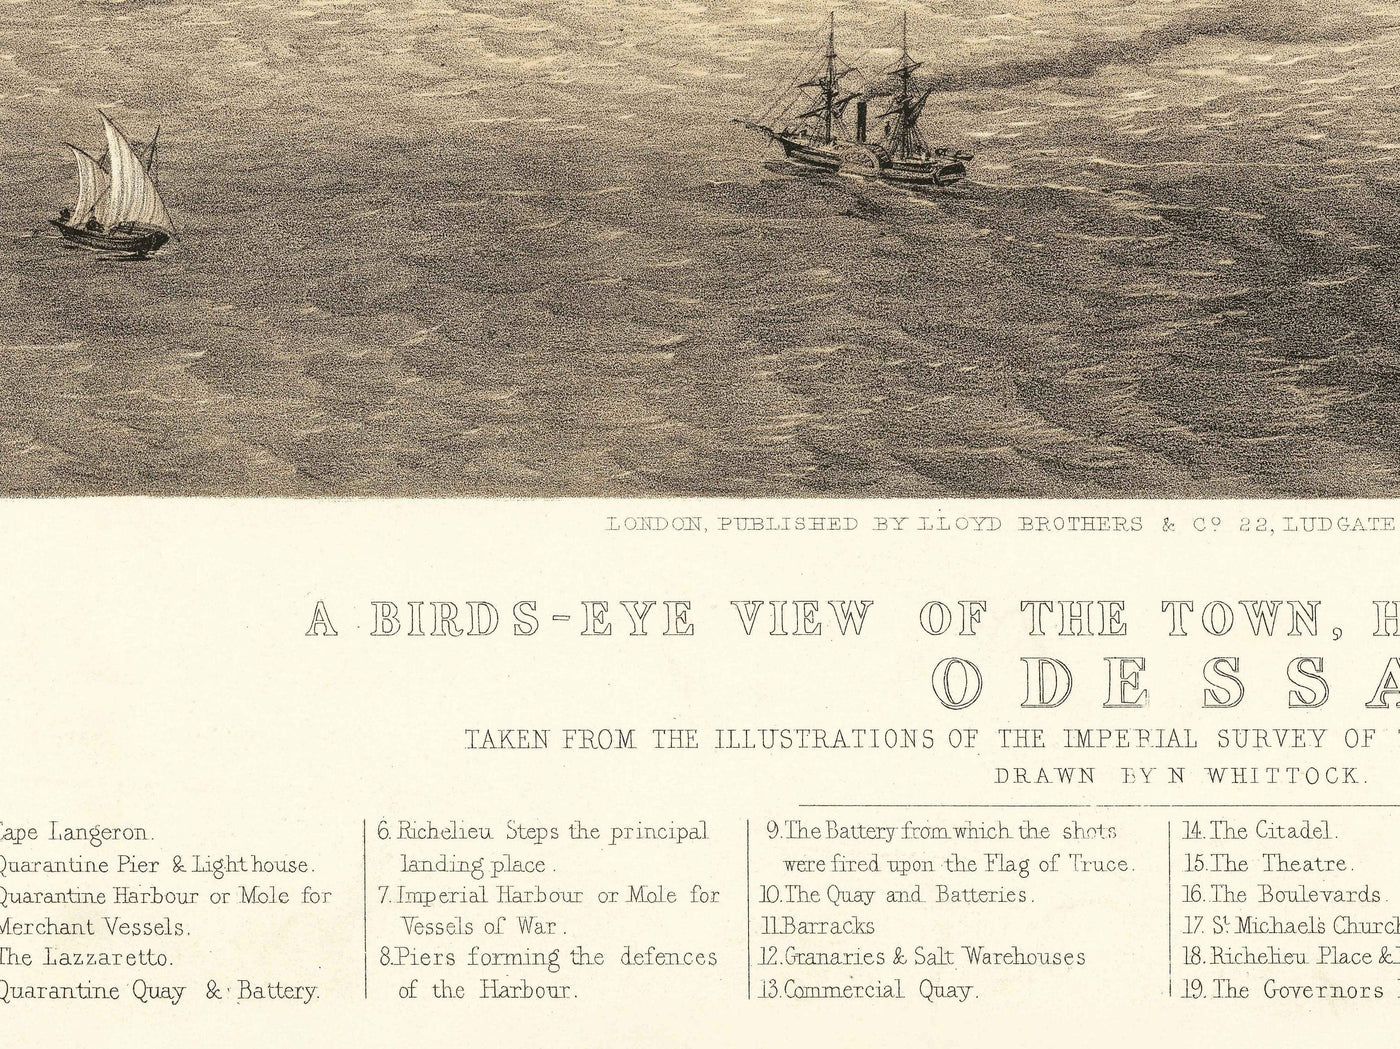 Old Map of Odessa, Ukraine, 1855 - Black Sea Harbour Town - Forts, Citadel, City Centre - Birds-Eye Illustration